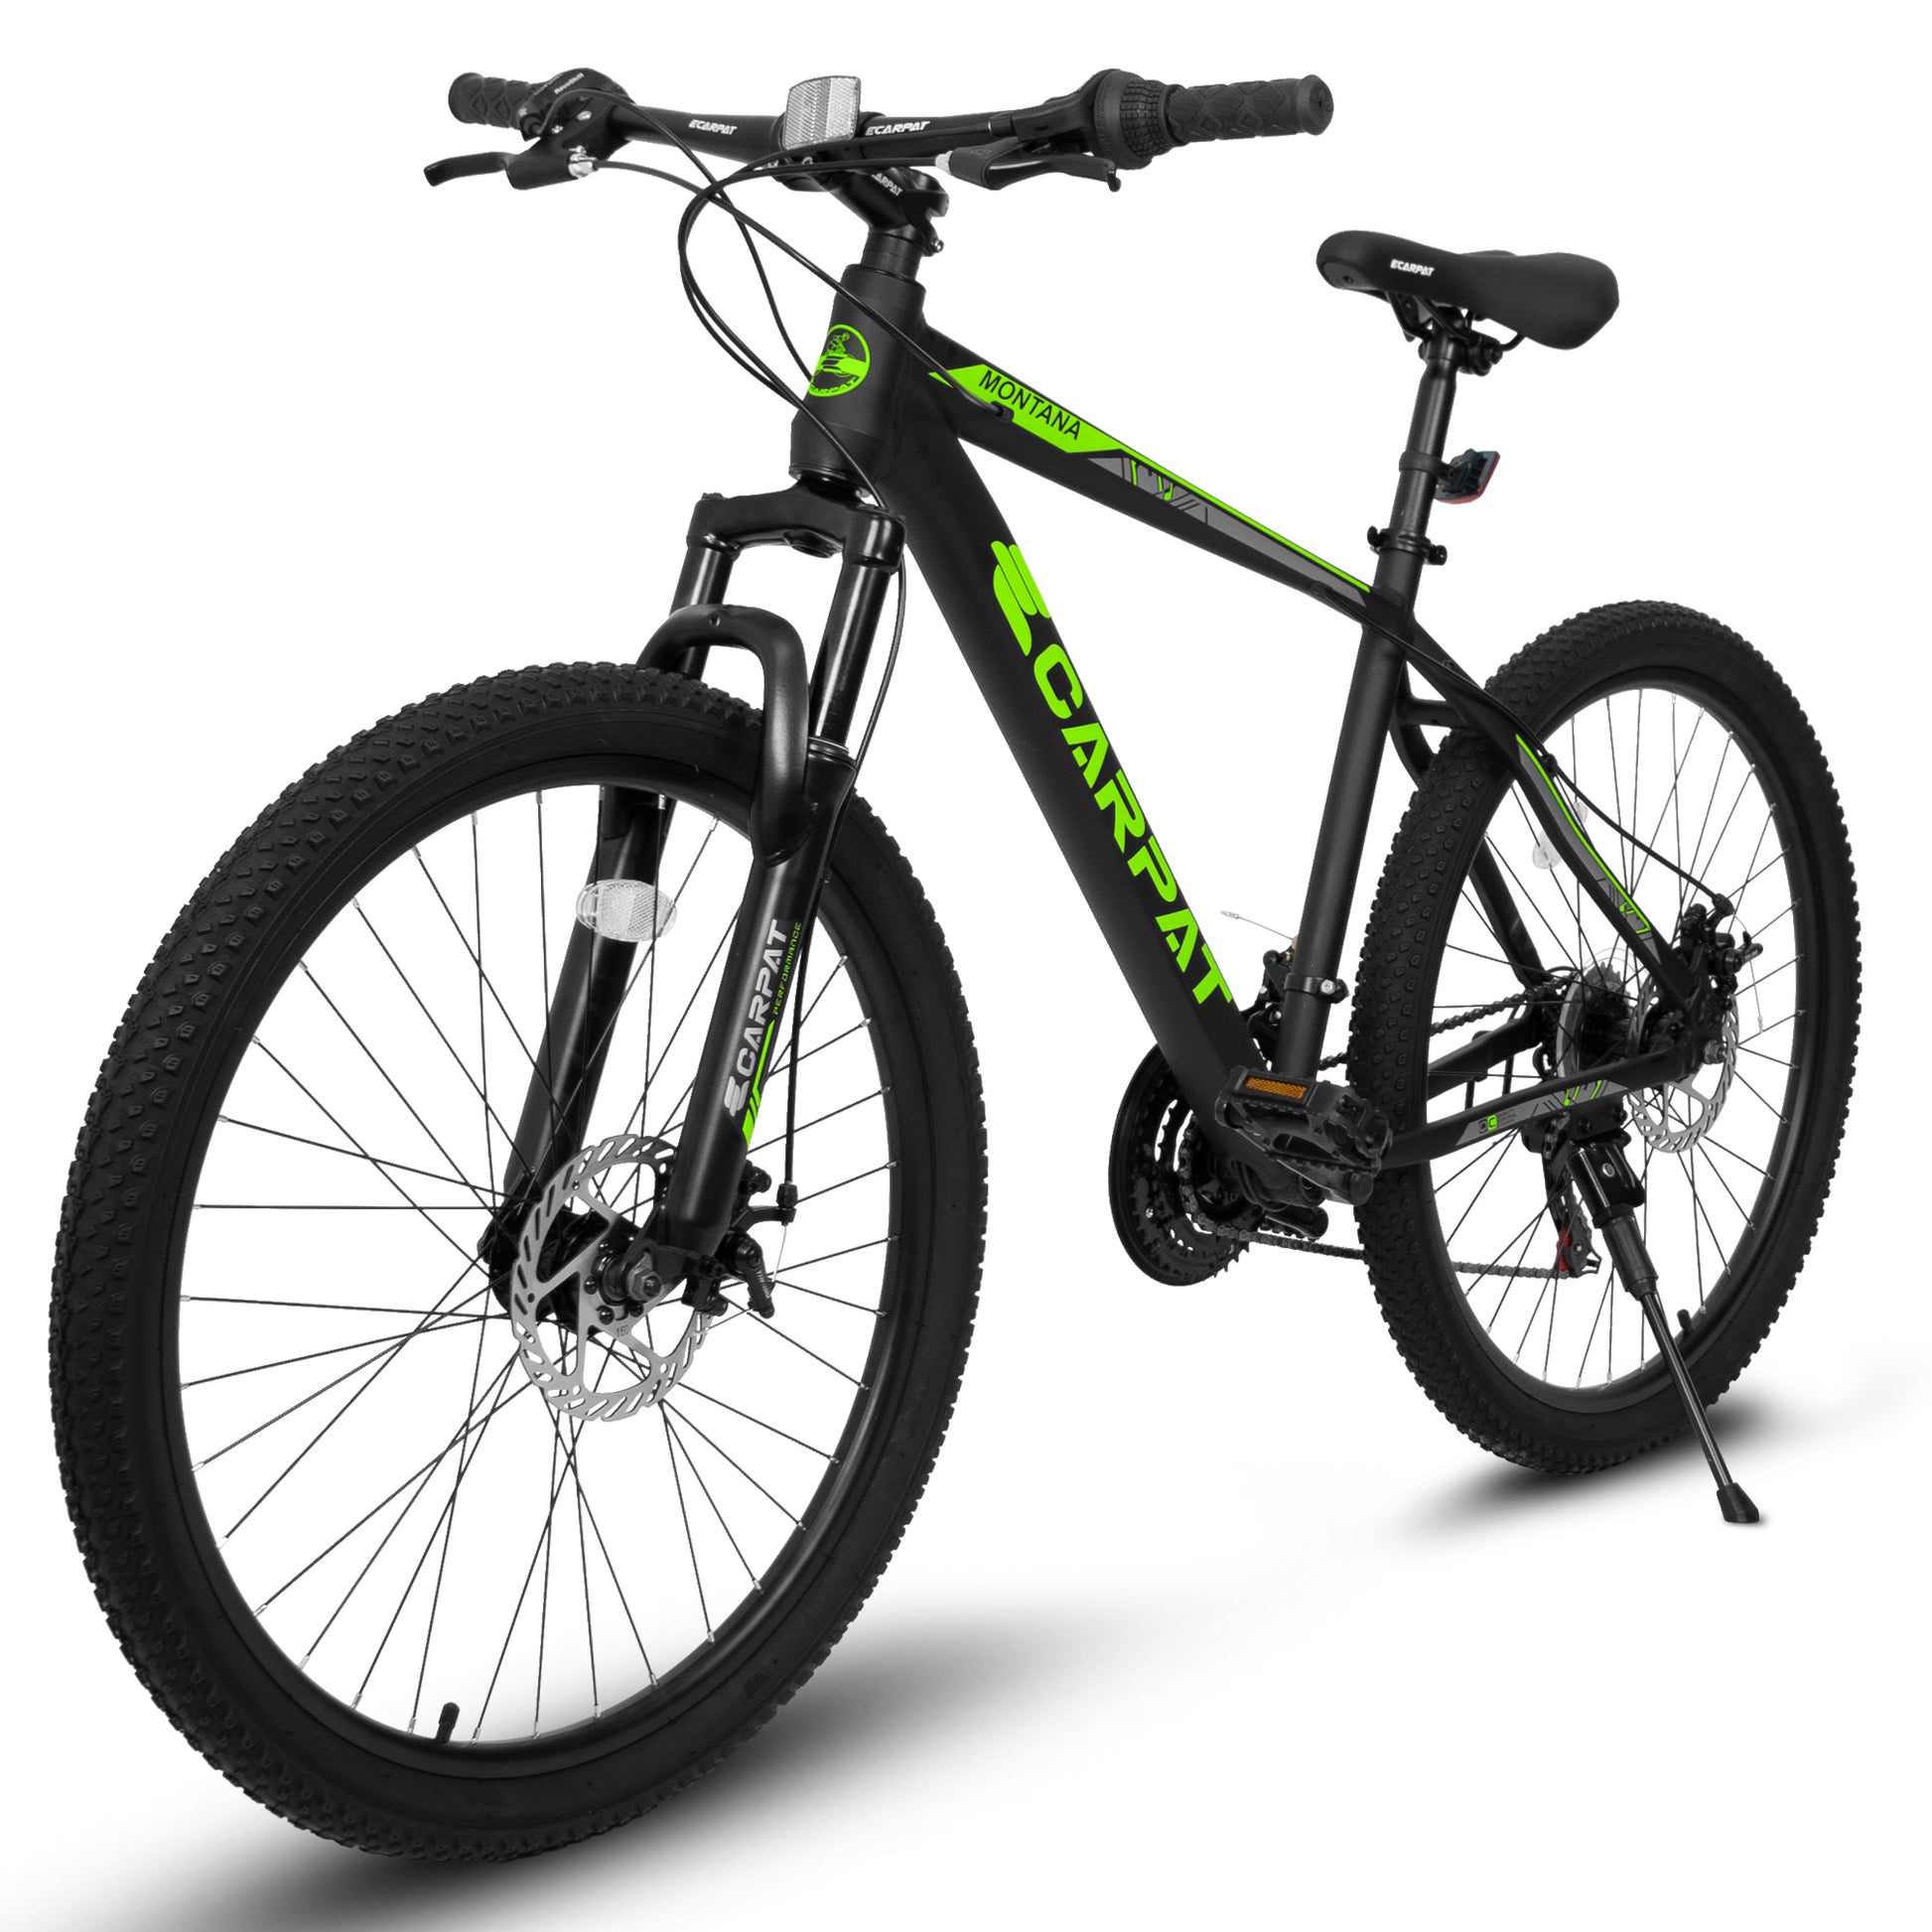 A26322 26 inch mountain bike adult aluminum frame green-aluminium